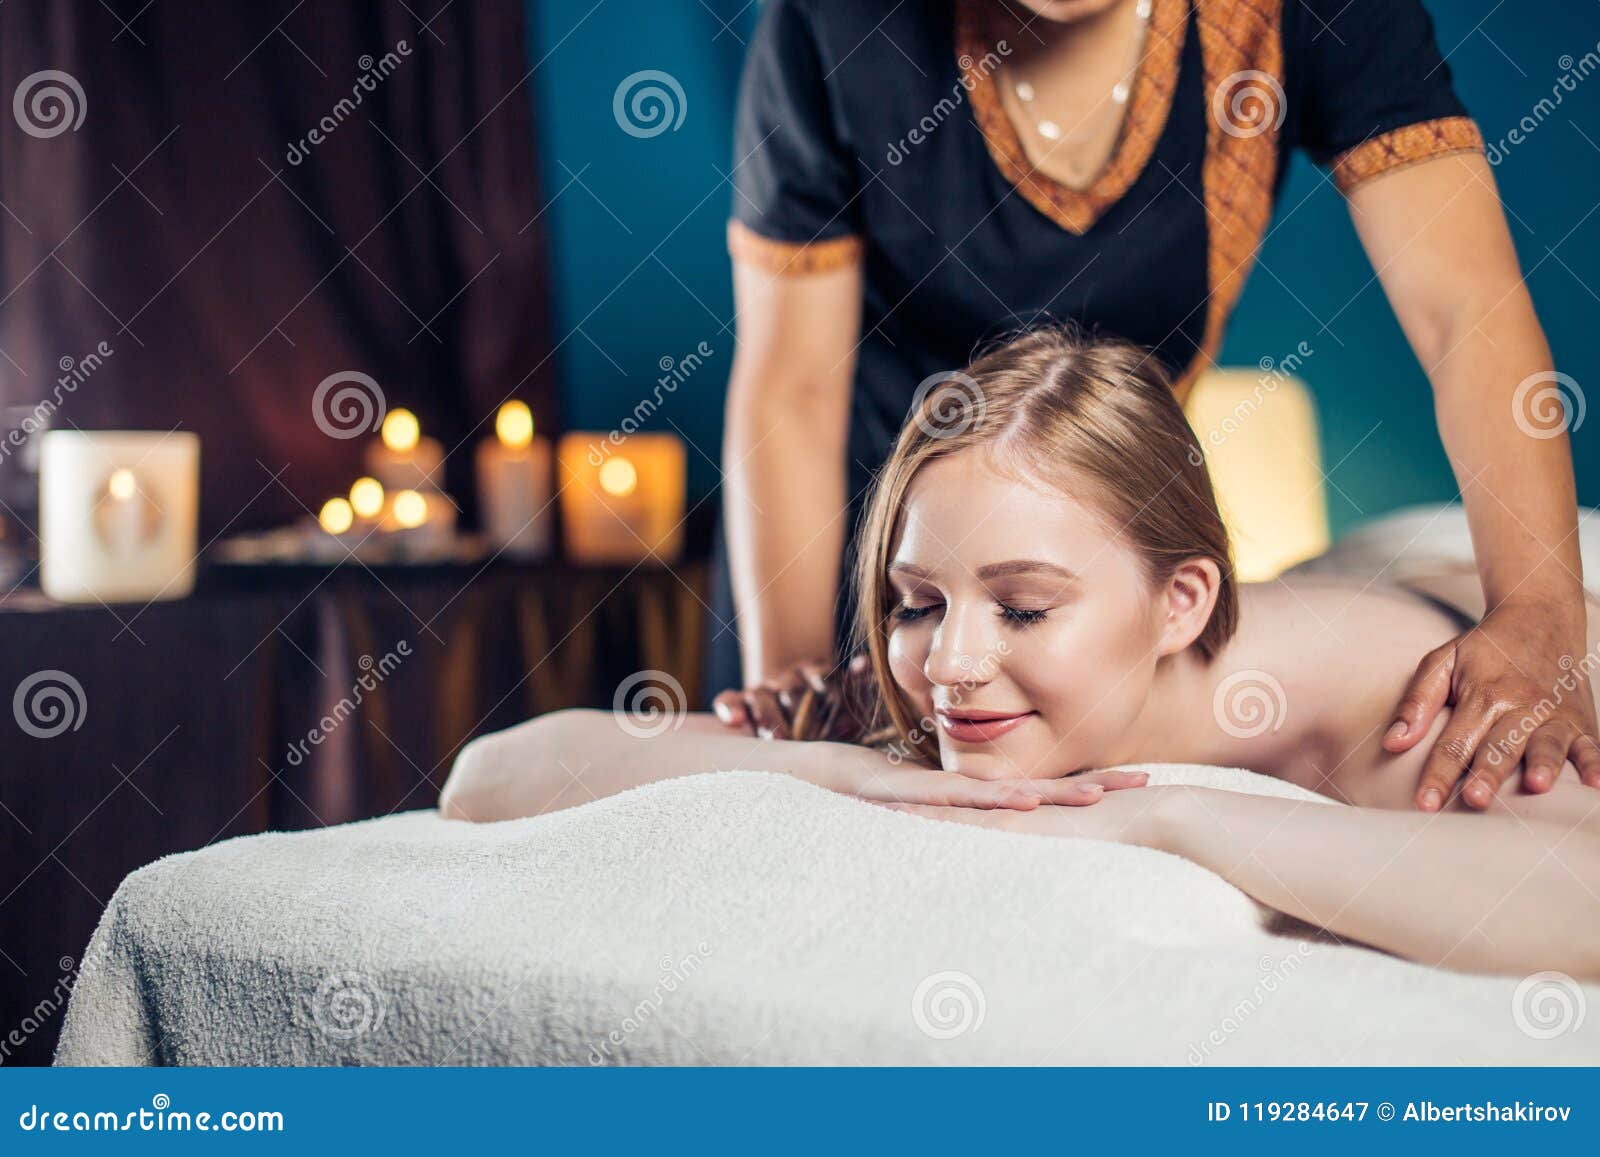 massage redhead by body full